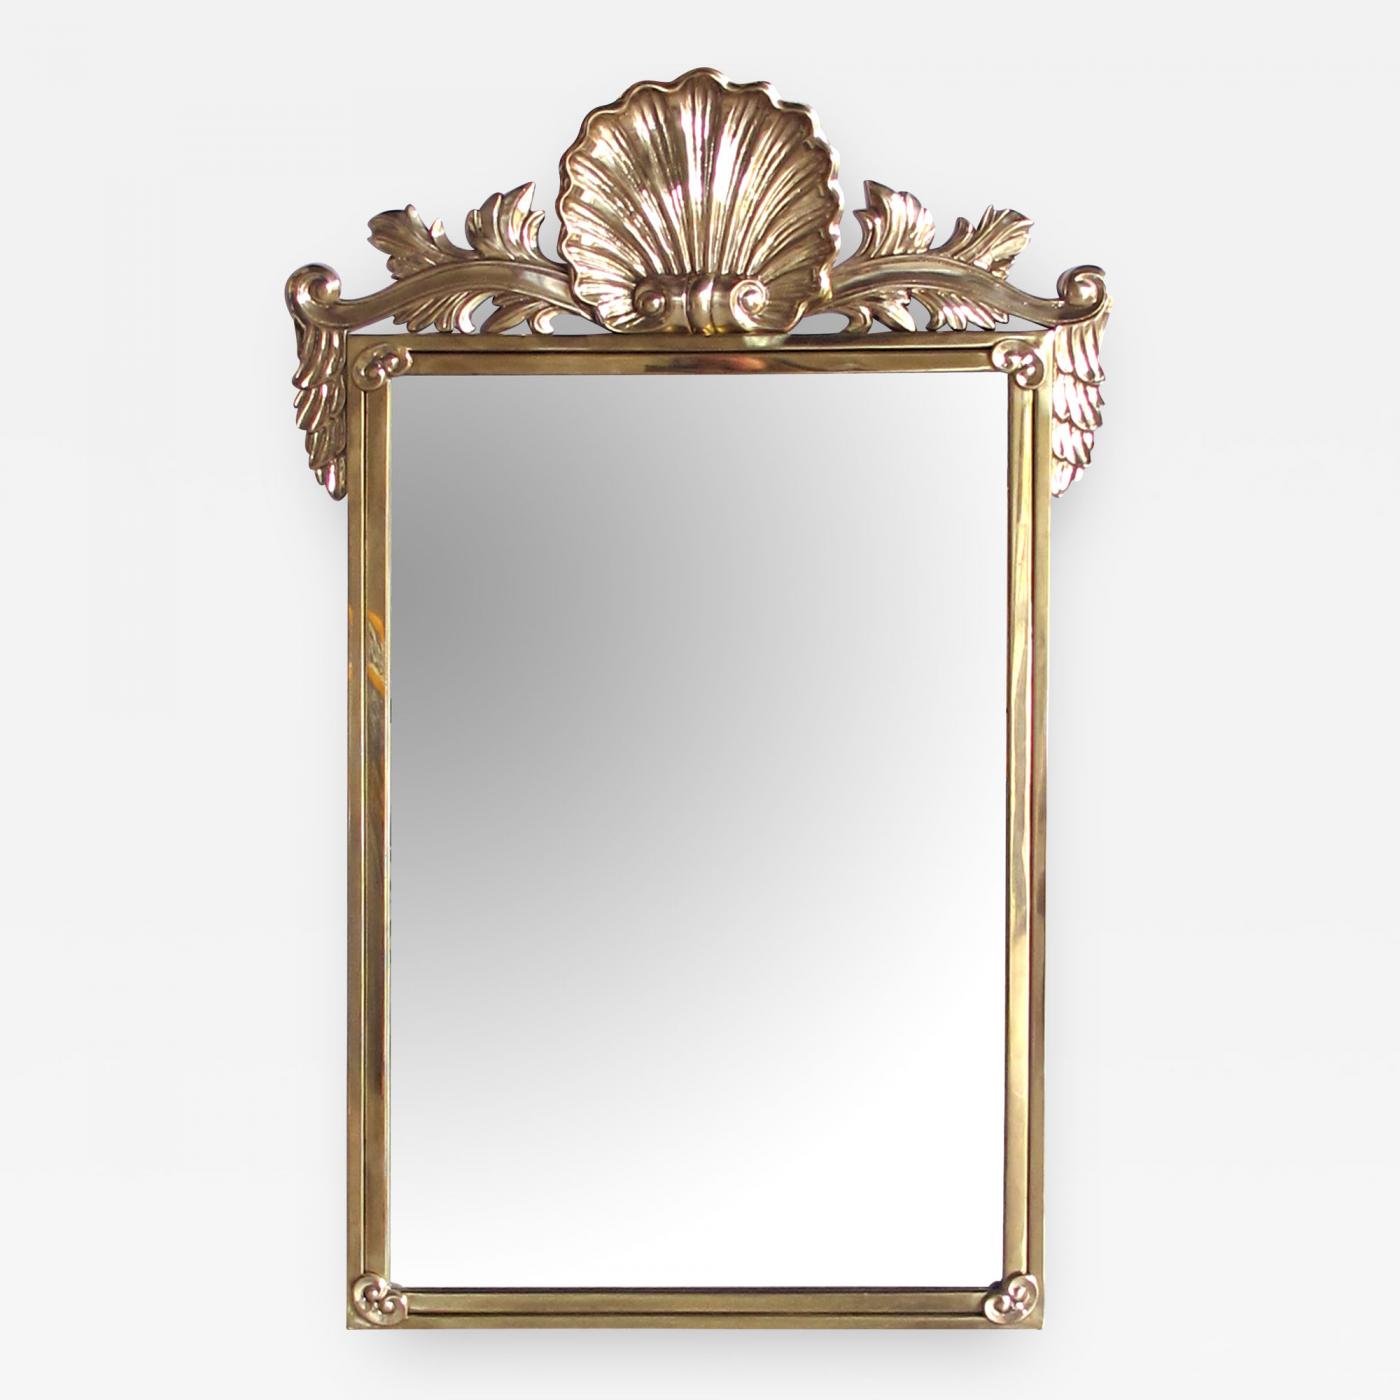 A good quality Italian Hollywood regency brass mirror by Decorative